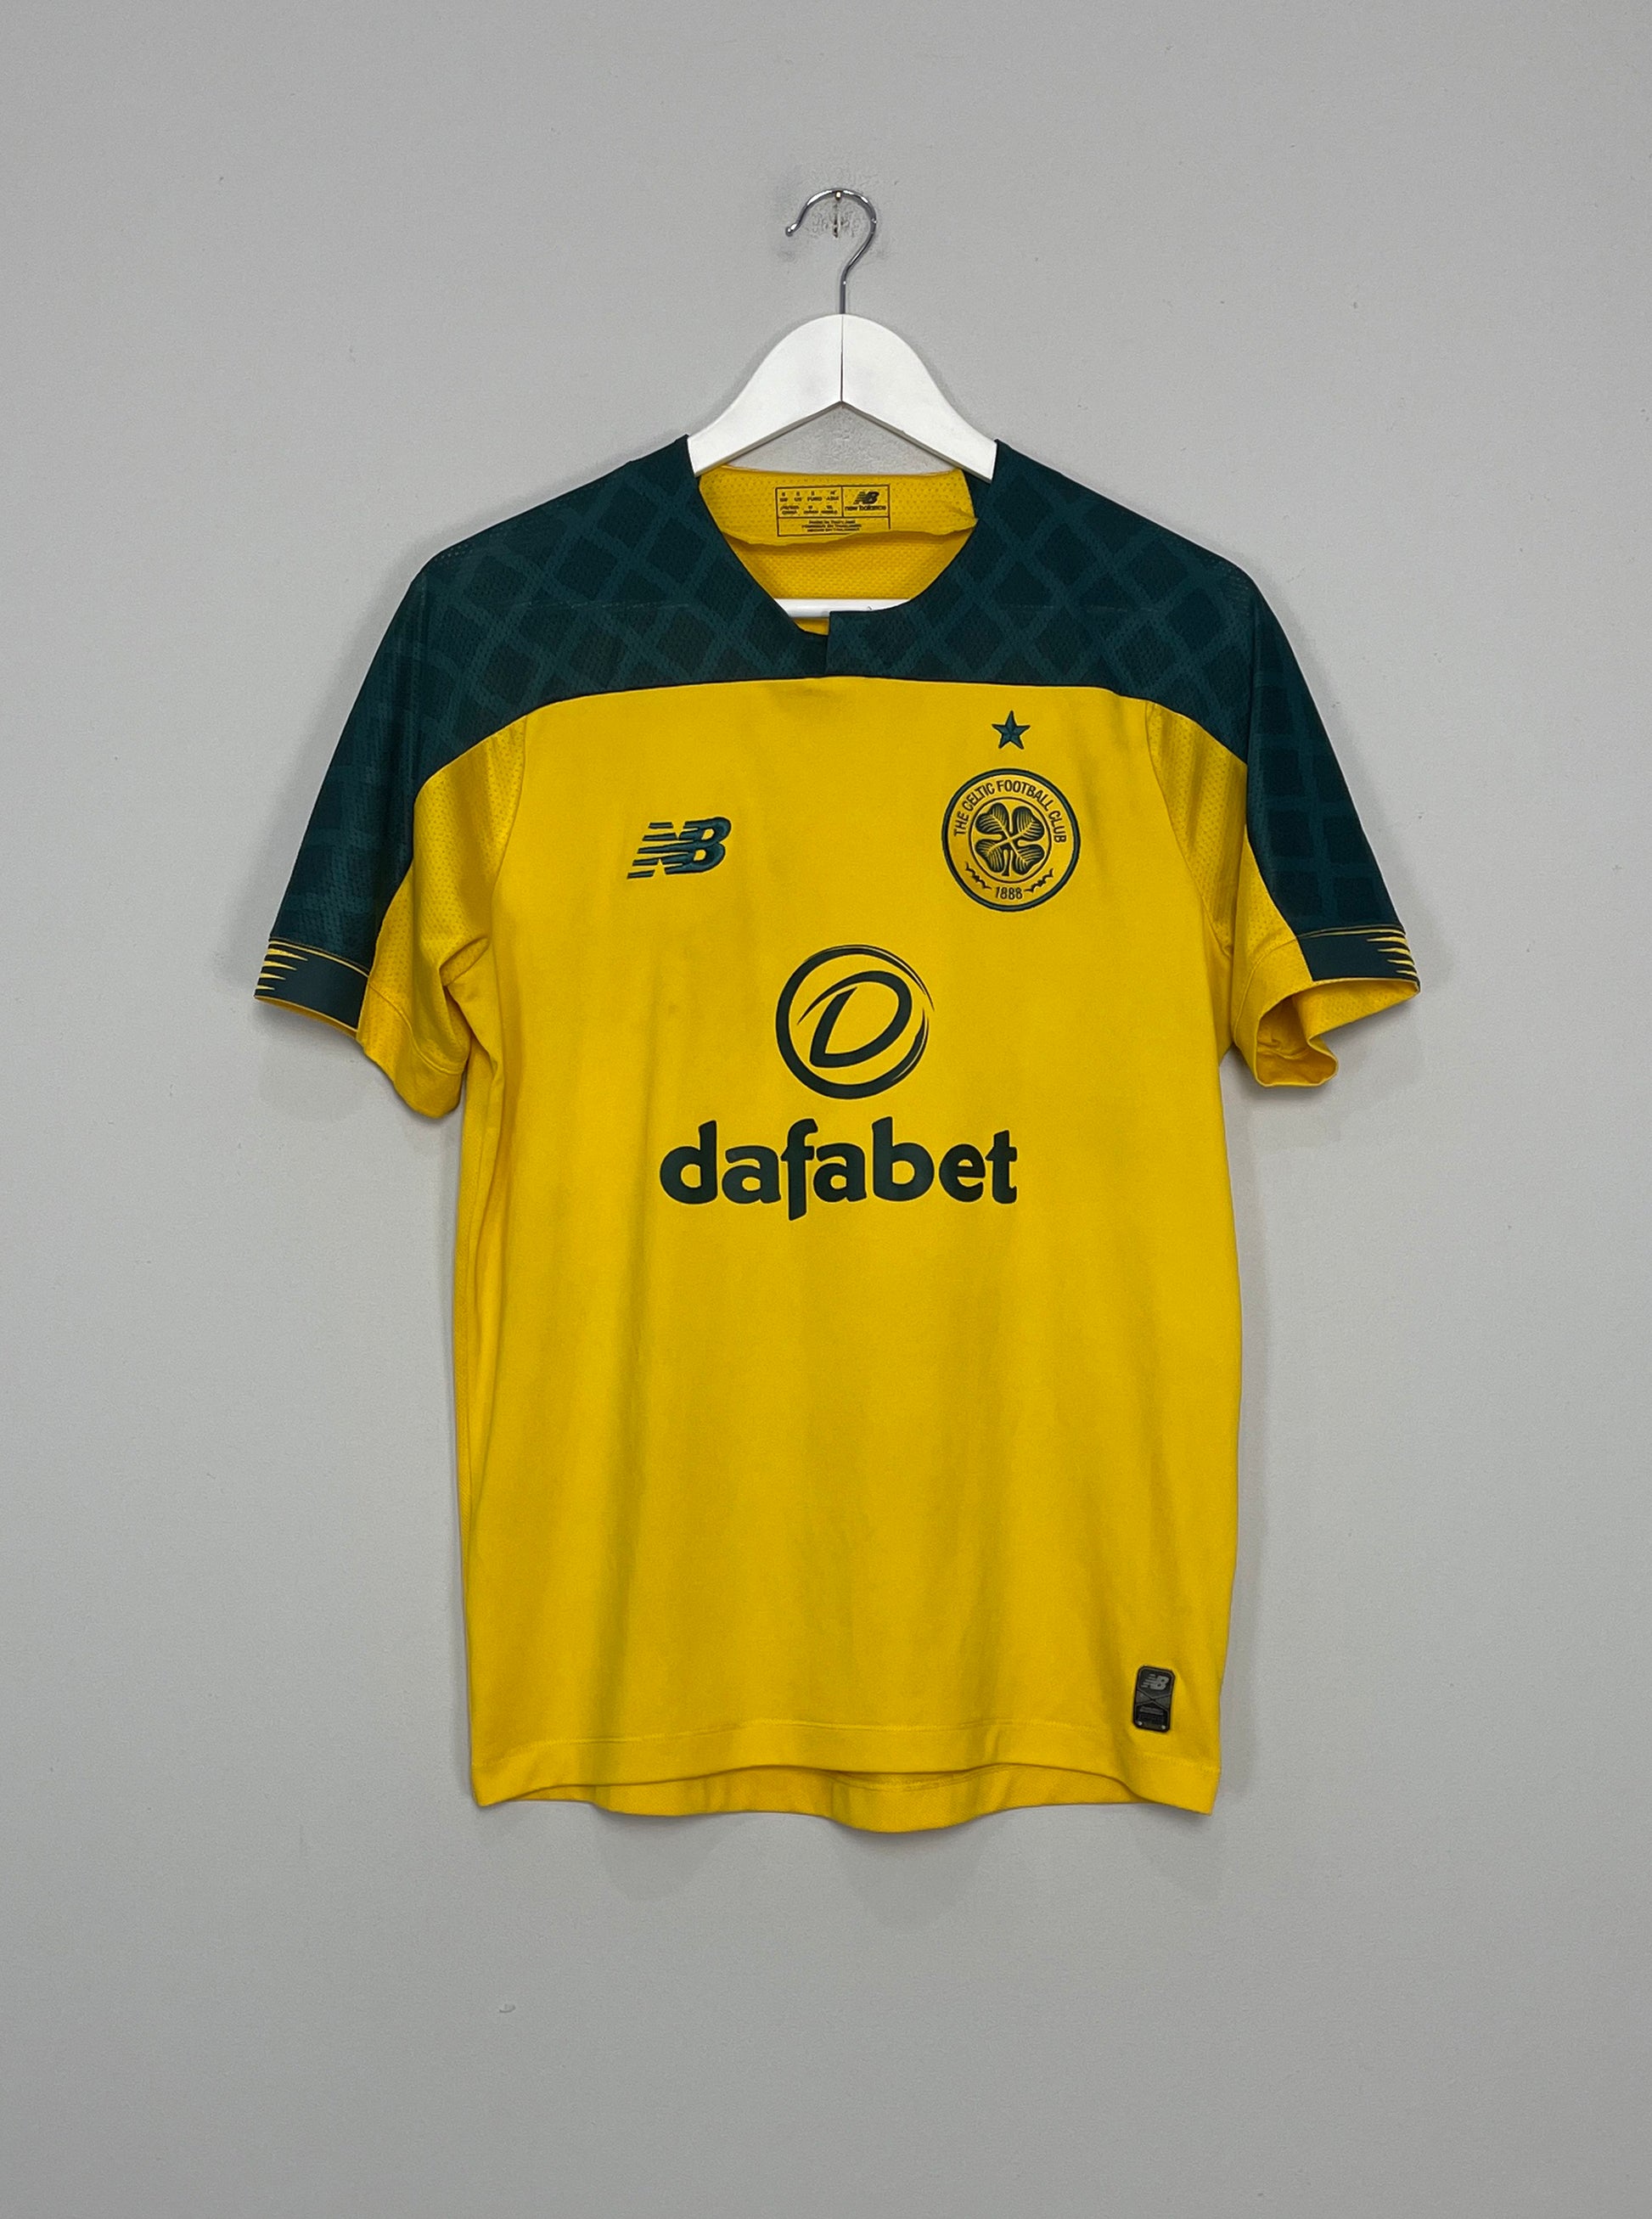 Celtic 2019-20 Home Shirt (Very Good) L